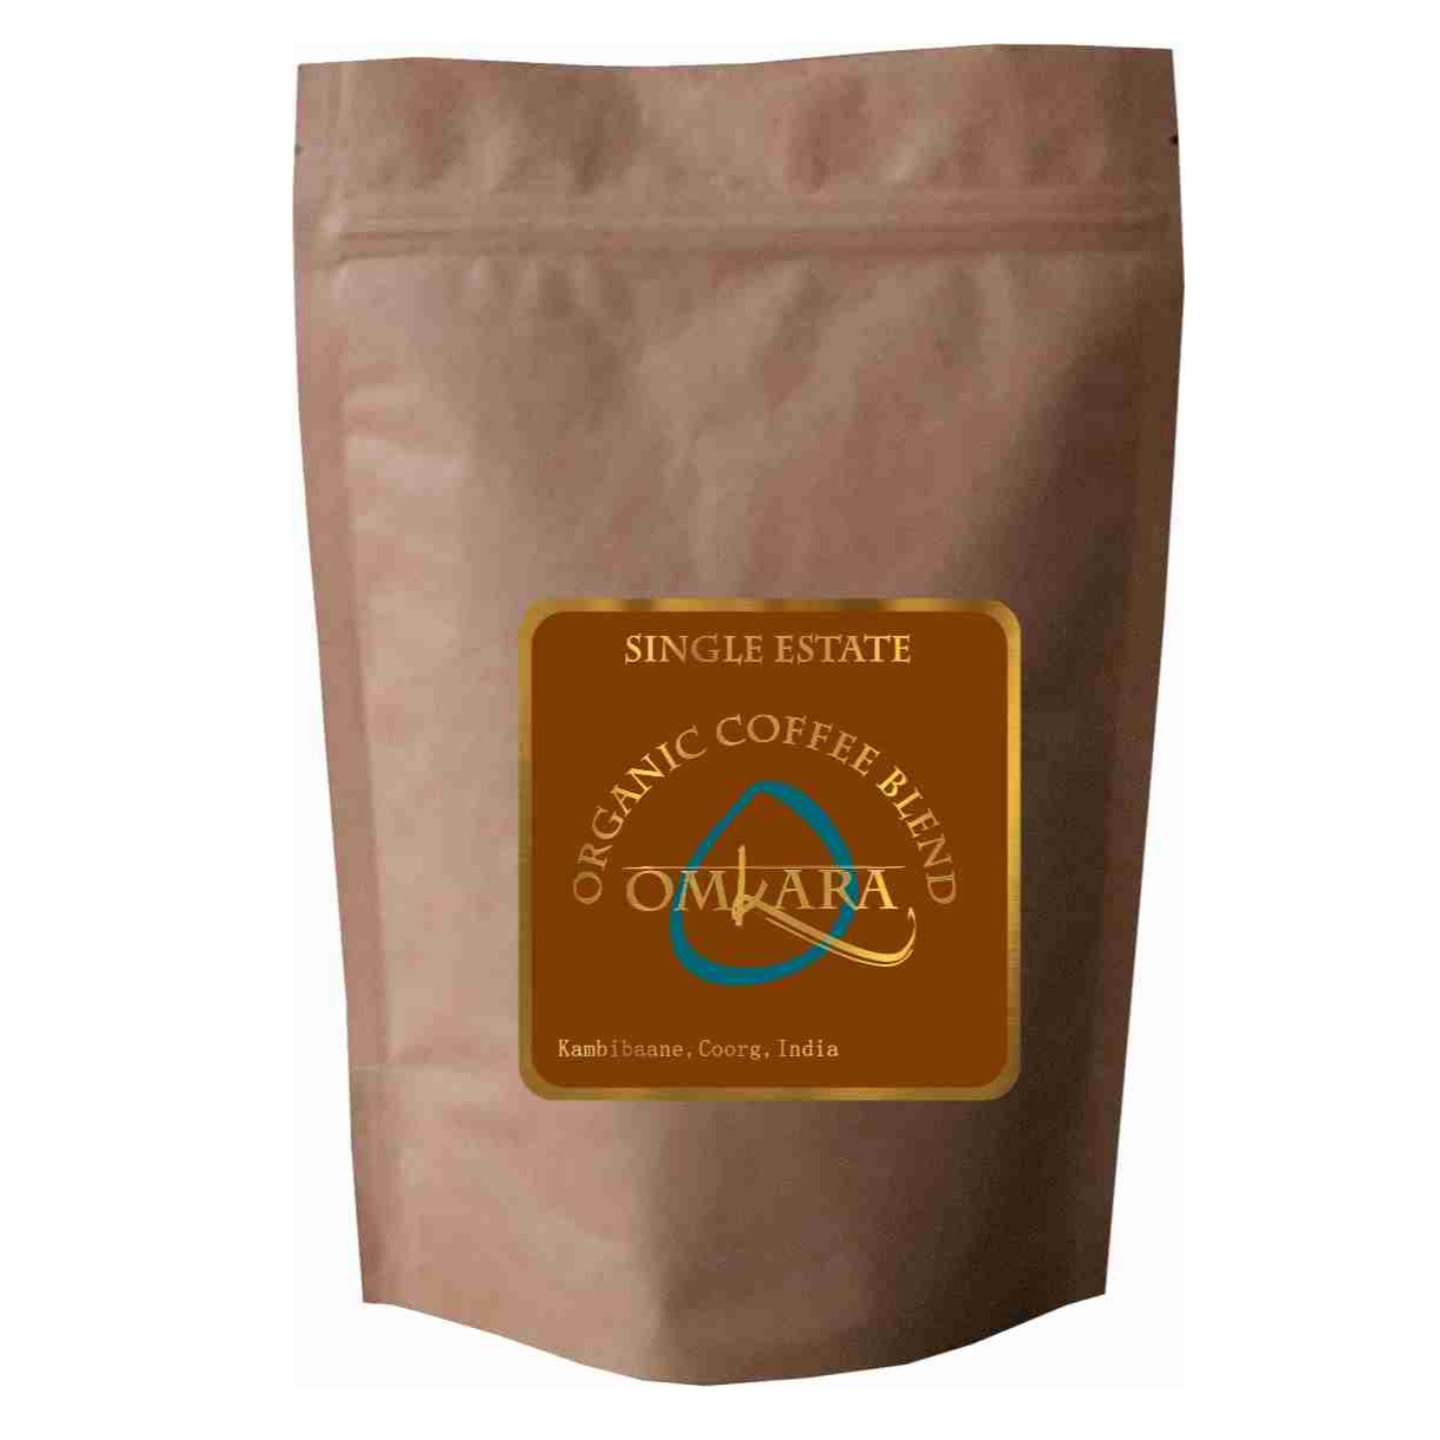 www.fivefarms.in - OMKARA - Single estate organic coffee blend